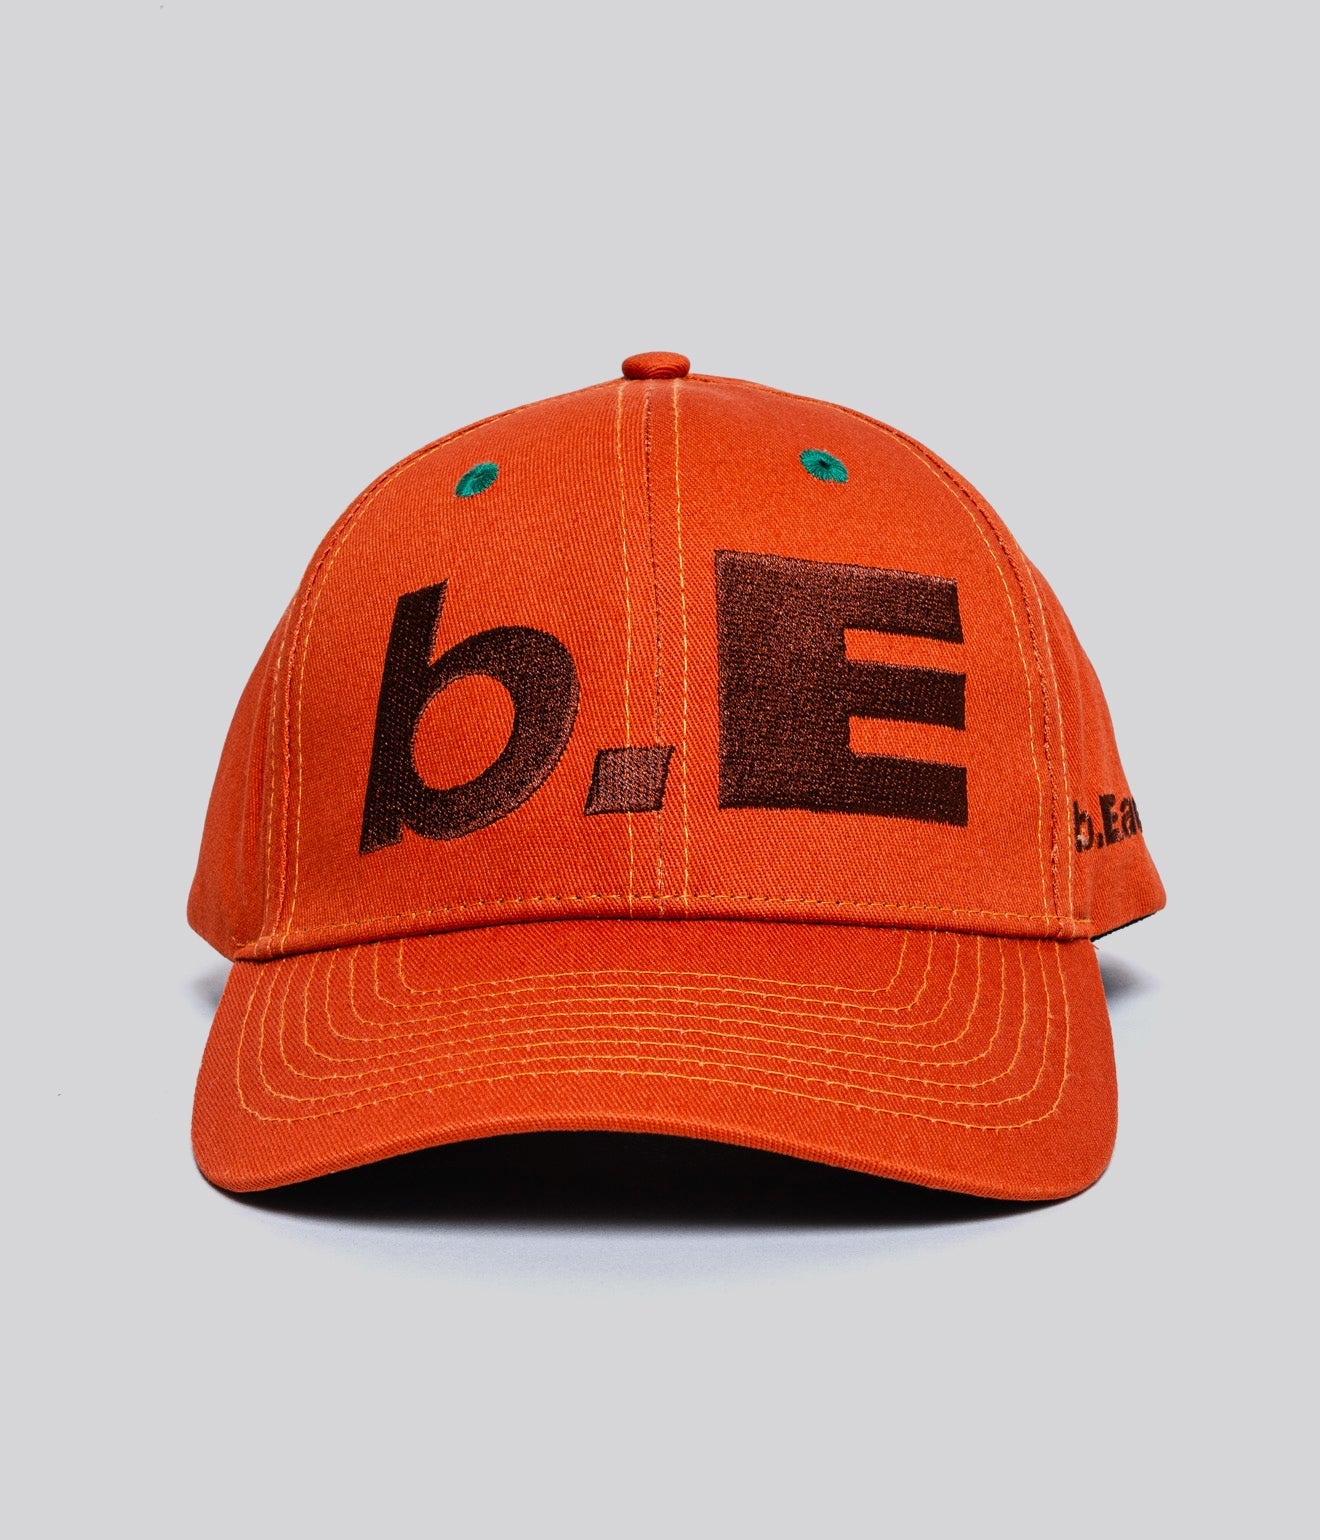 b.Eautiful "b.E Hat" Burnt Orange / Brown - WEAREALLANIMALS